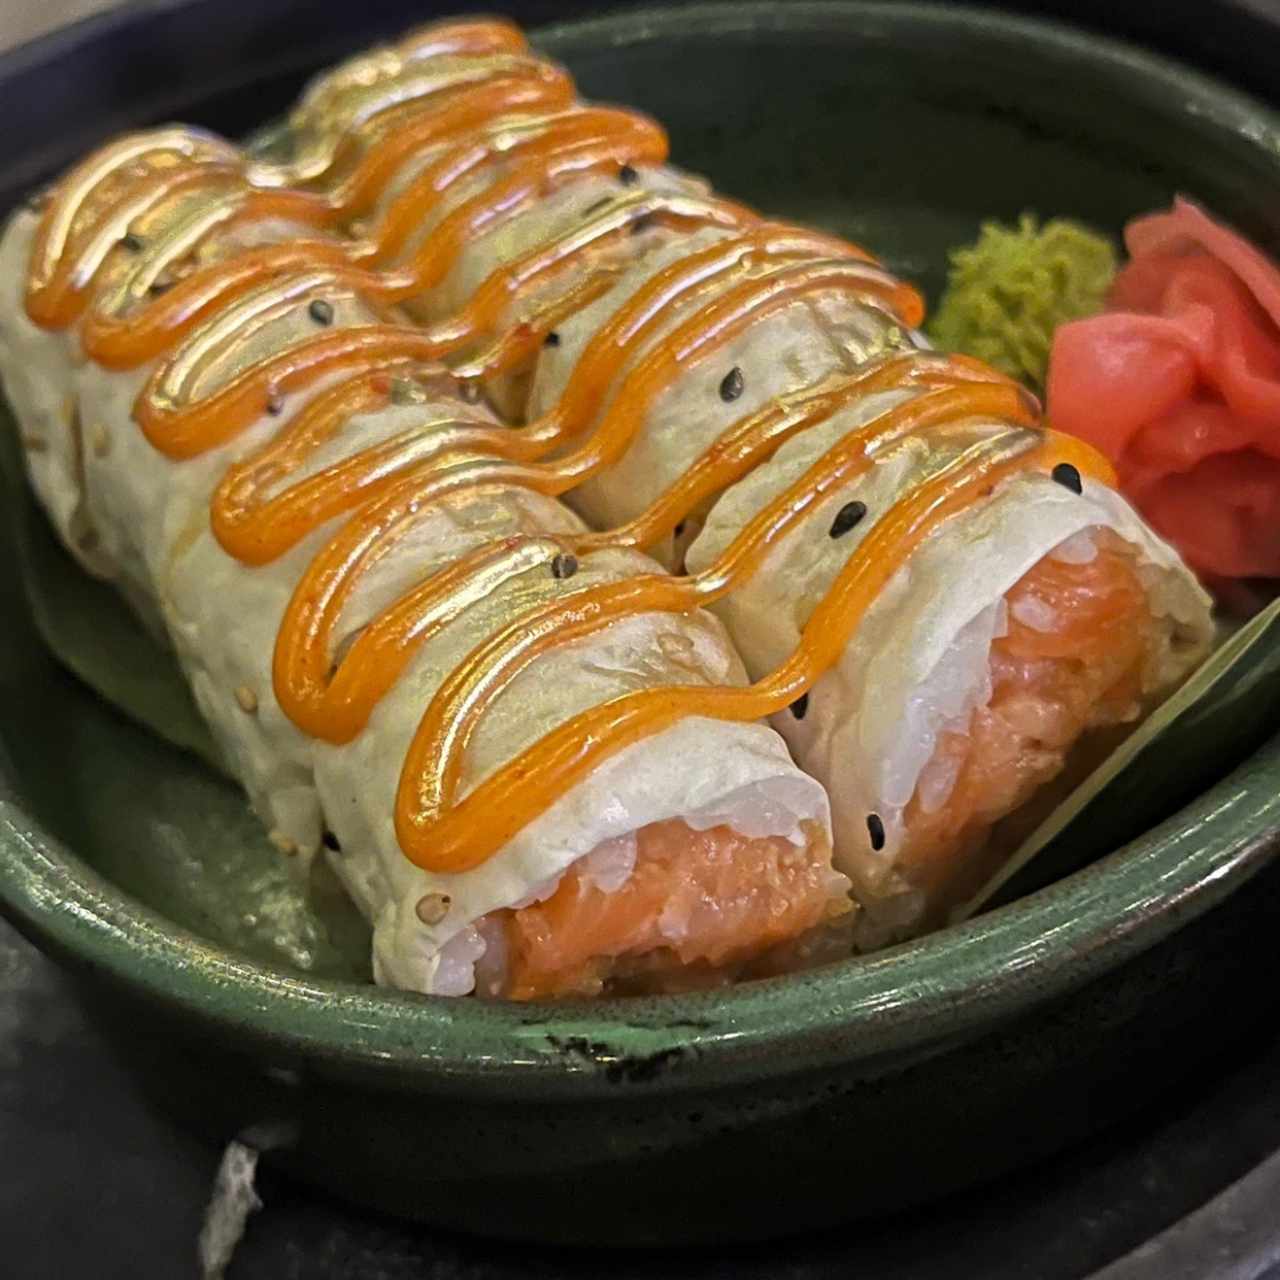 Rolls - Golden Flame Salmon